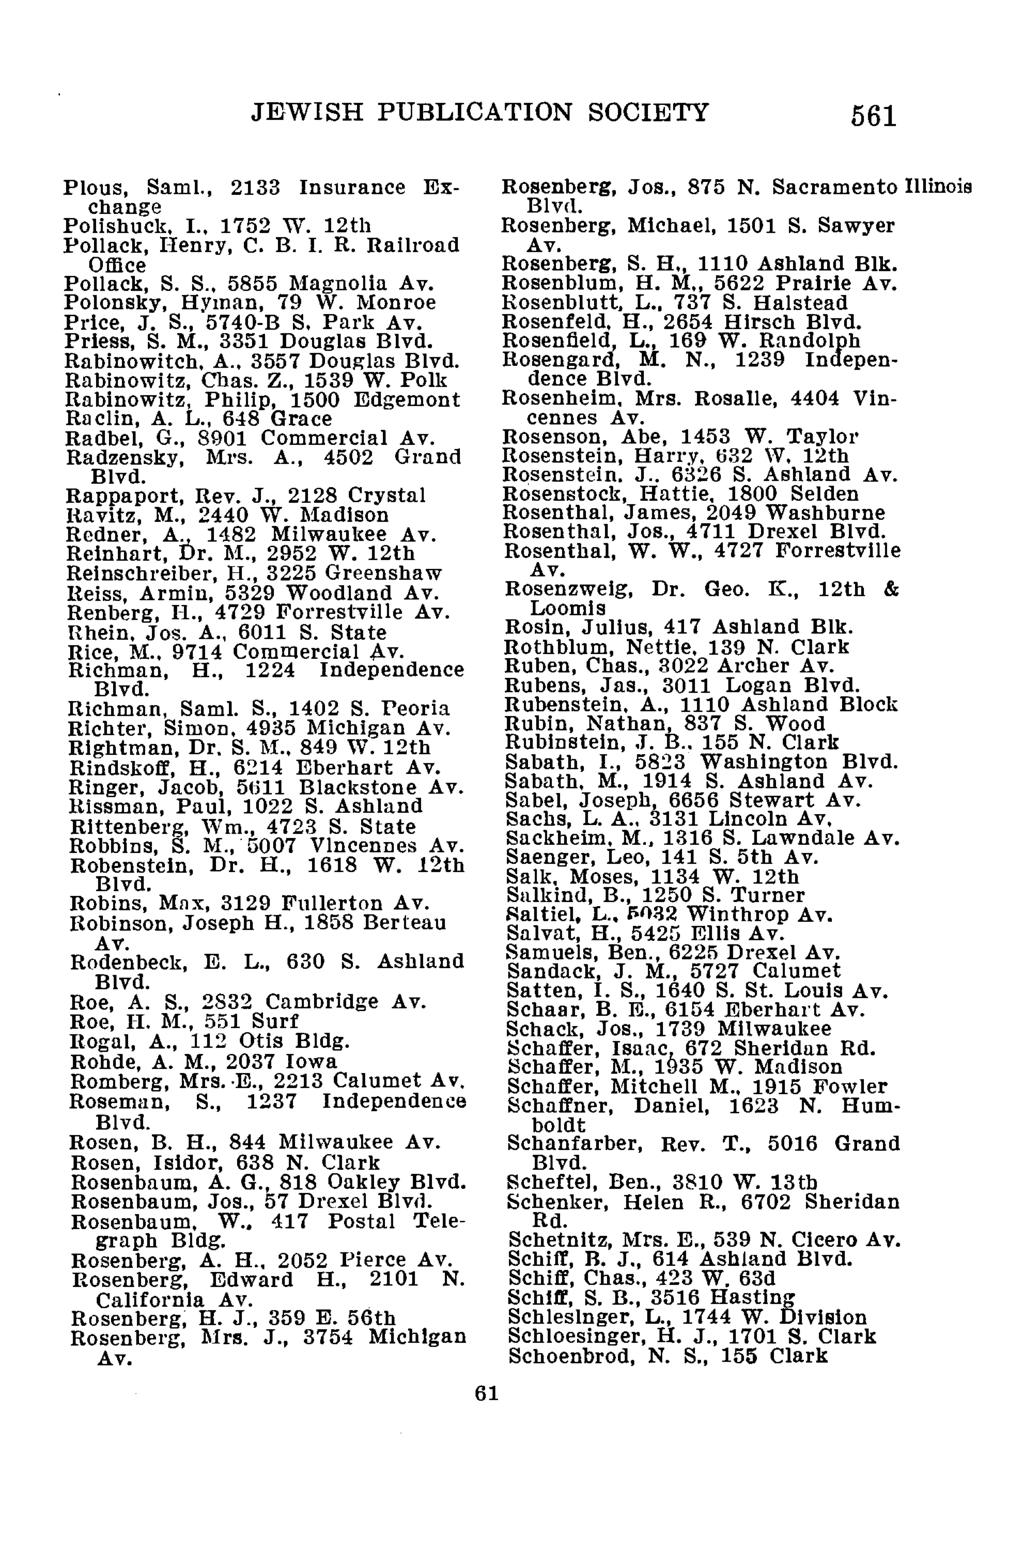 JEWISH PUBLICATION SOCIETY 561 Pious, Saml., 2133 Insurance Exchange Polishuck, I., 1752 W. 12th Pollack, Henry, C. B. I. R. Railroad Office Pollack, S. S., 5855 Magnolia Polonsky, Hyman, 79 W.